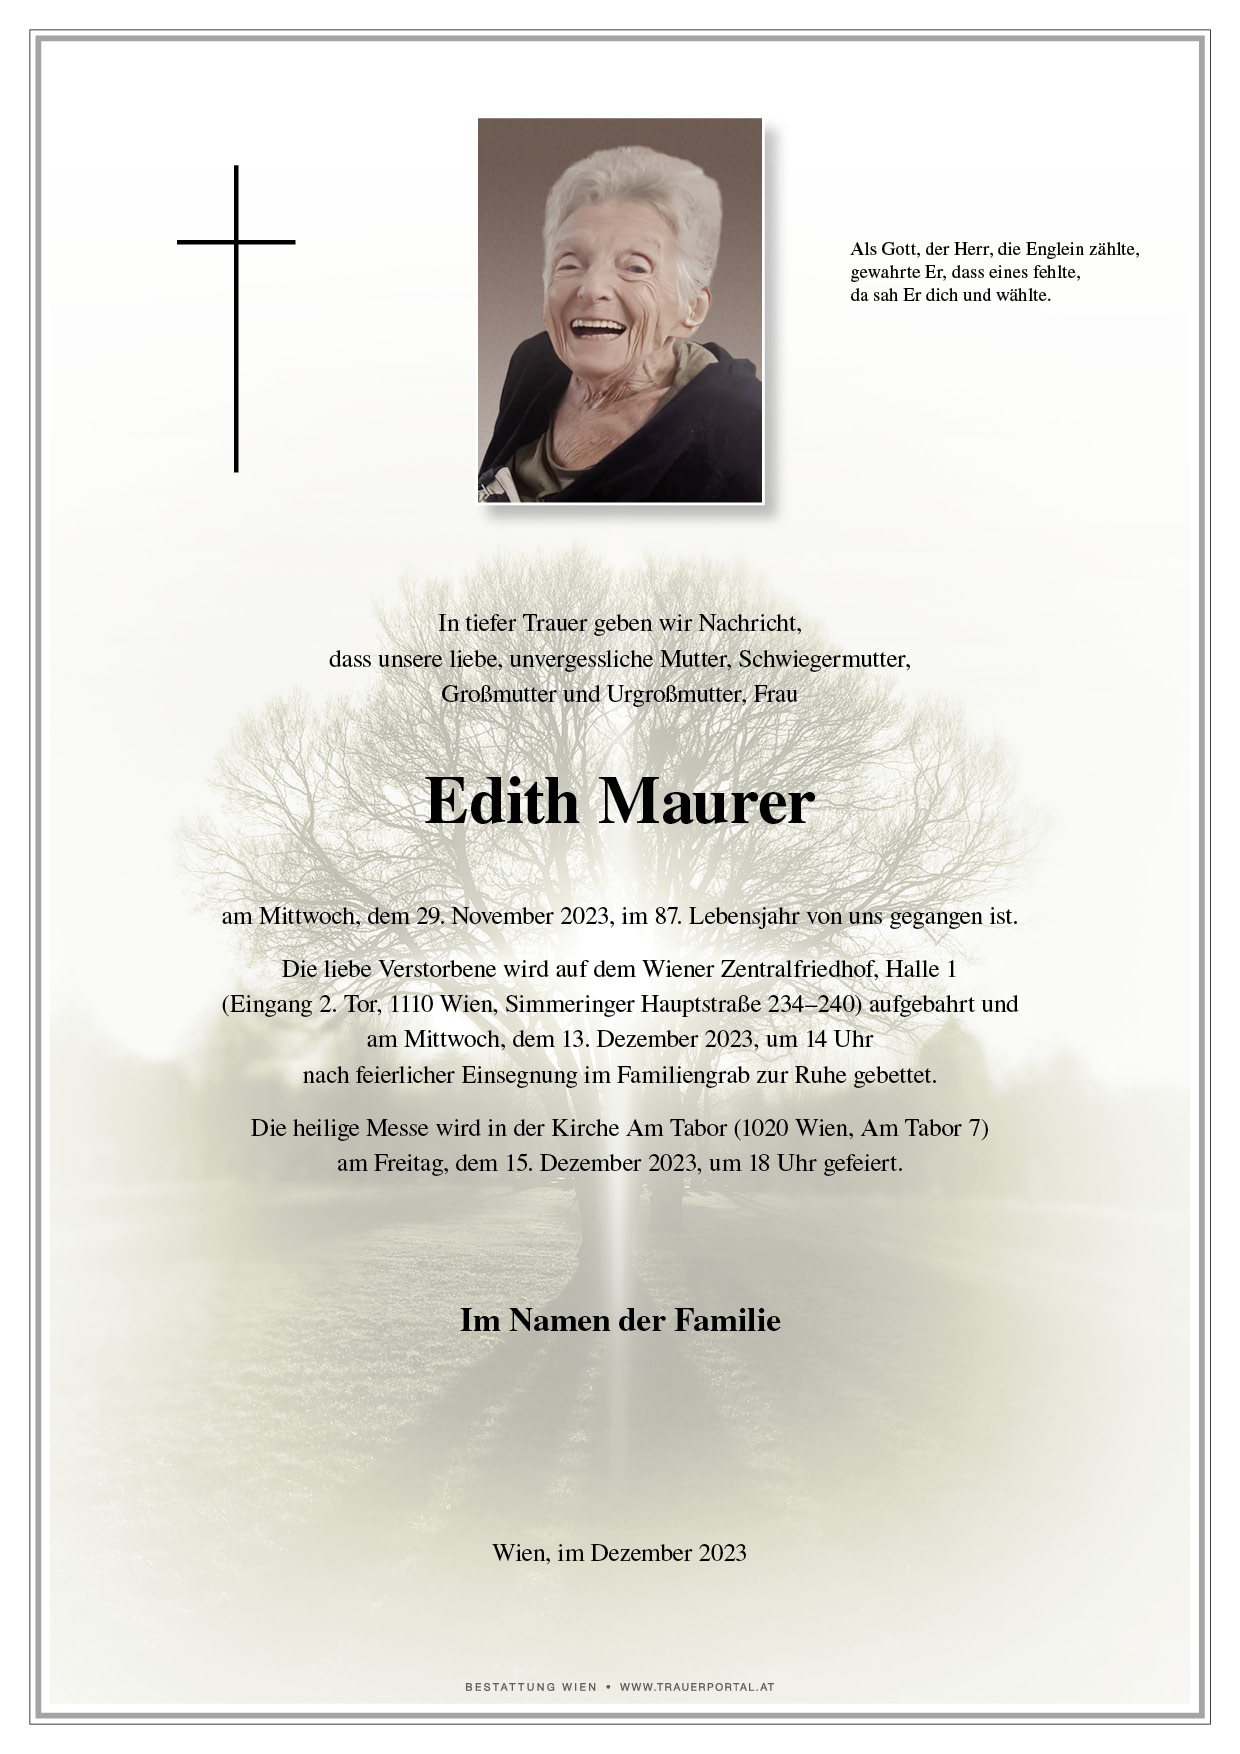 Edith Maurer